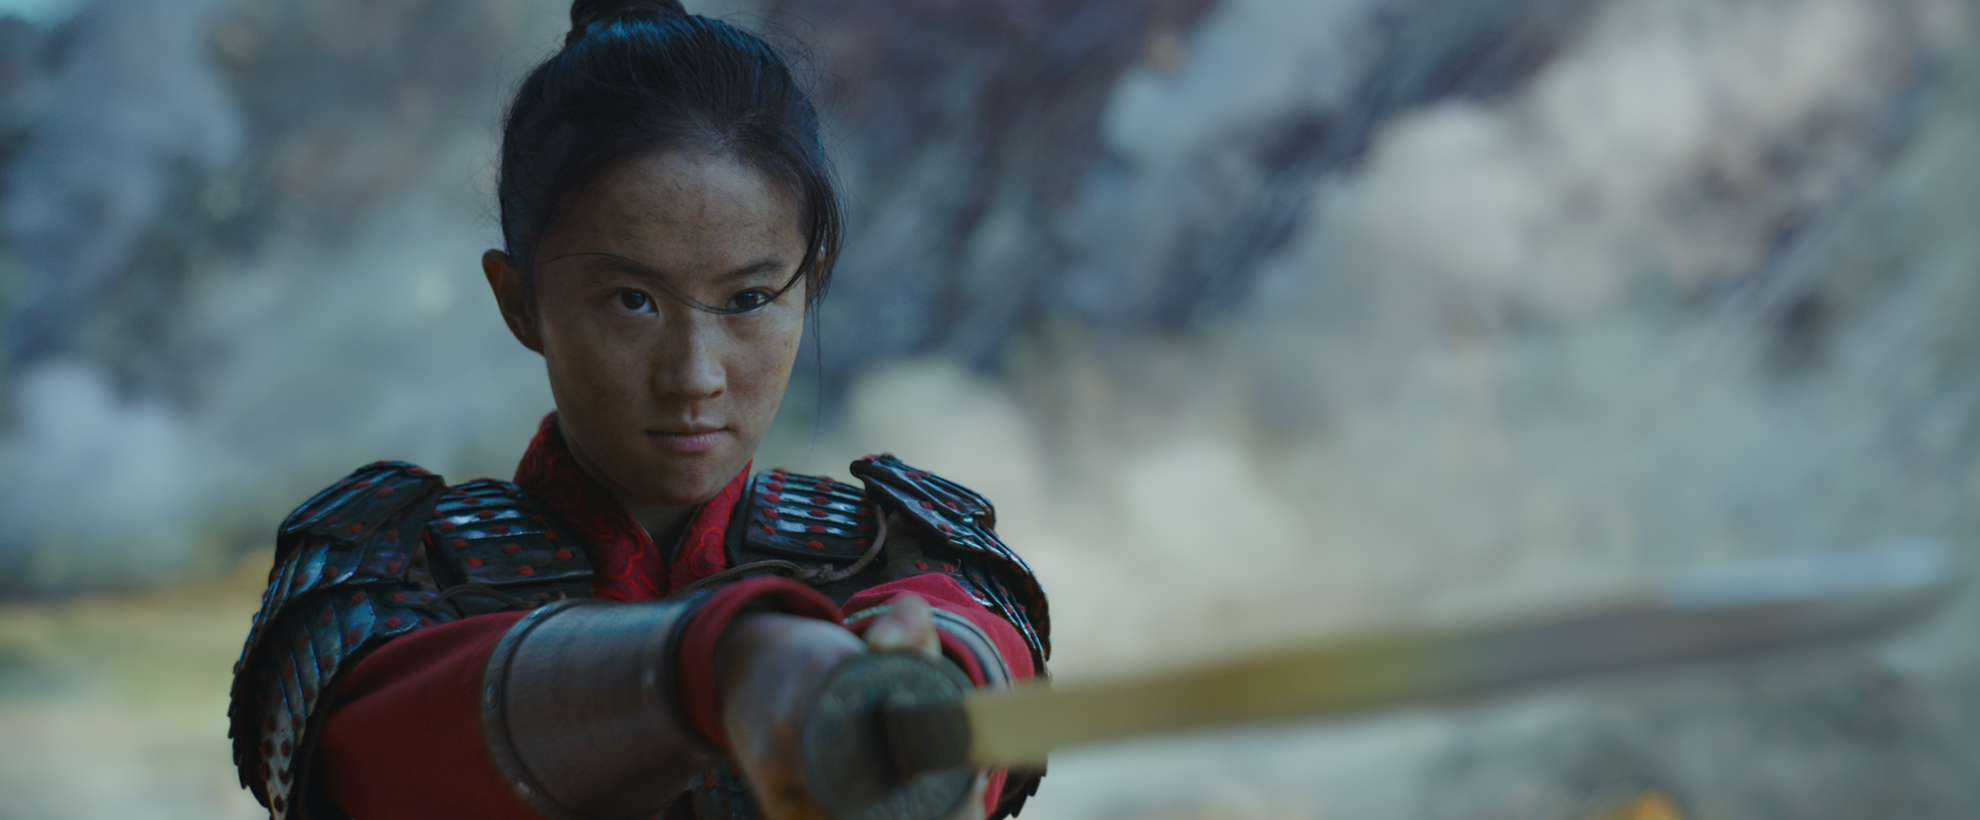 Mulan wearing armour, pointing a sword toward the camera